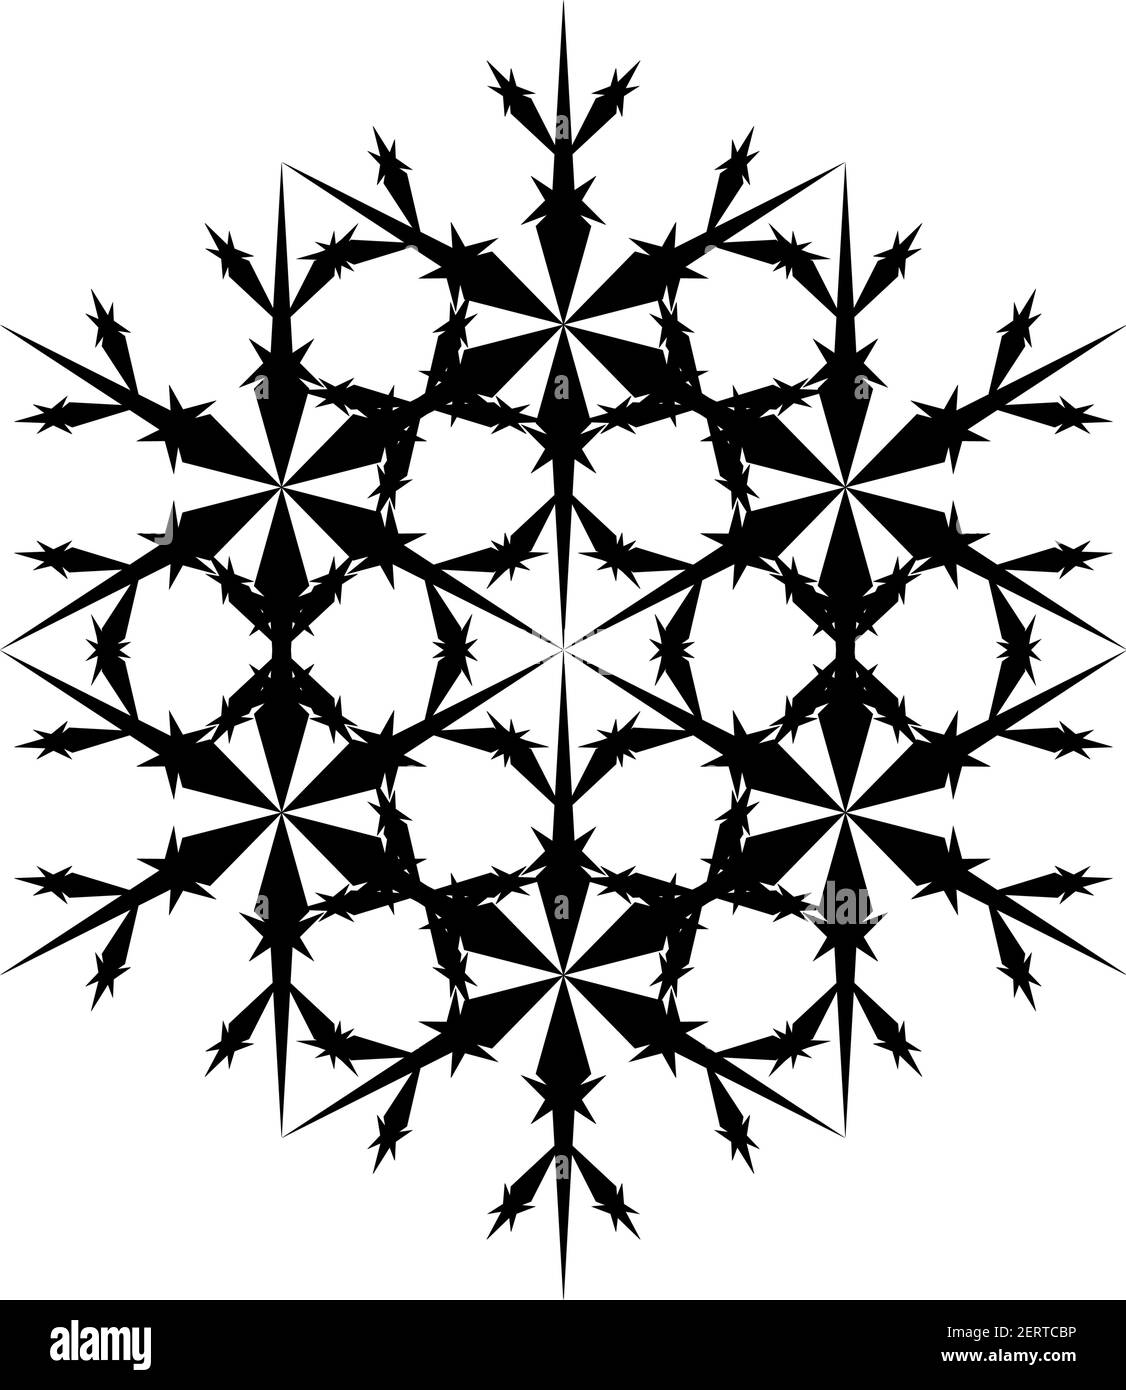 Snowflake Icon. Snowflake Icon picture. Snowflake in Flat Design. Pattern of Snow, Black Color Design. Vector illustration. Stock Vector